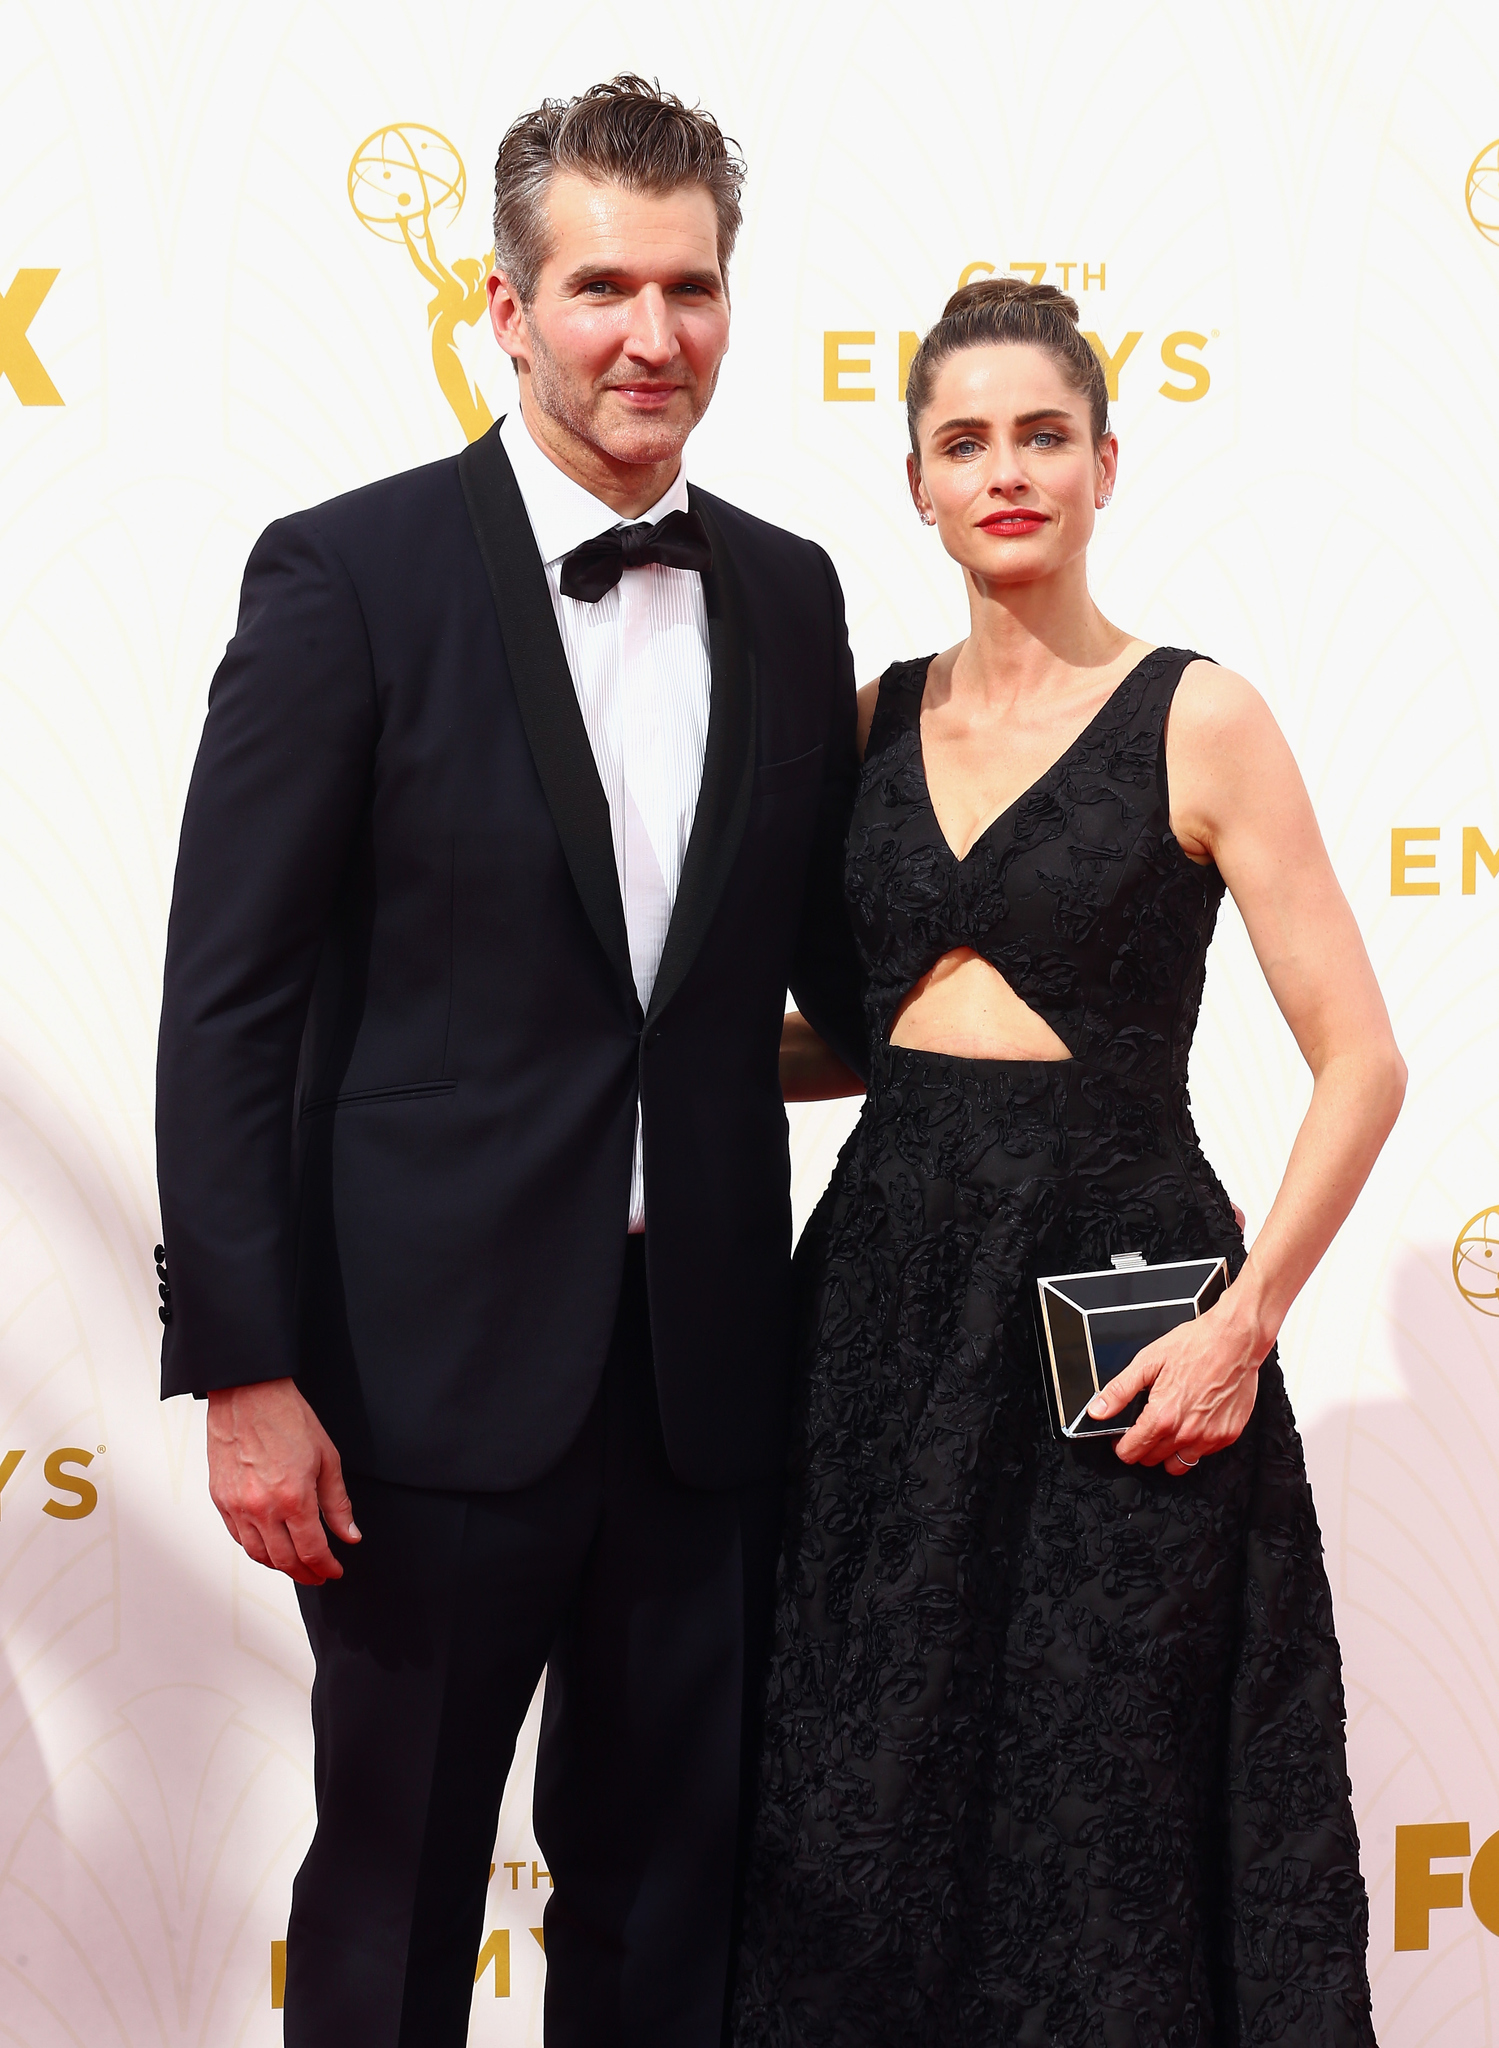 Amanda Peet and David Benioff at event of The 67th Primetime Emmy Awards (2015)